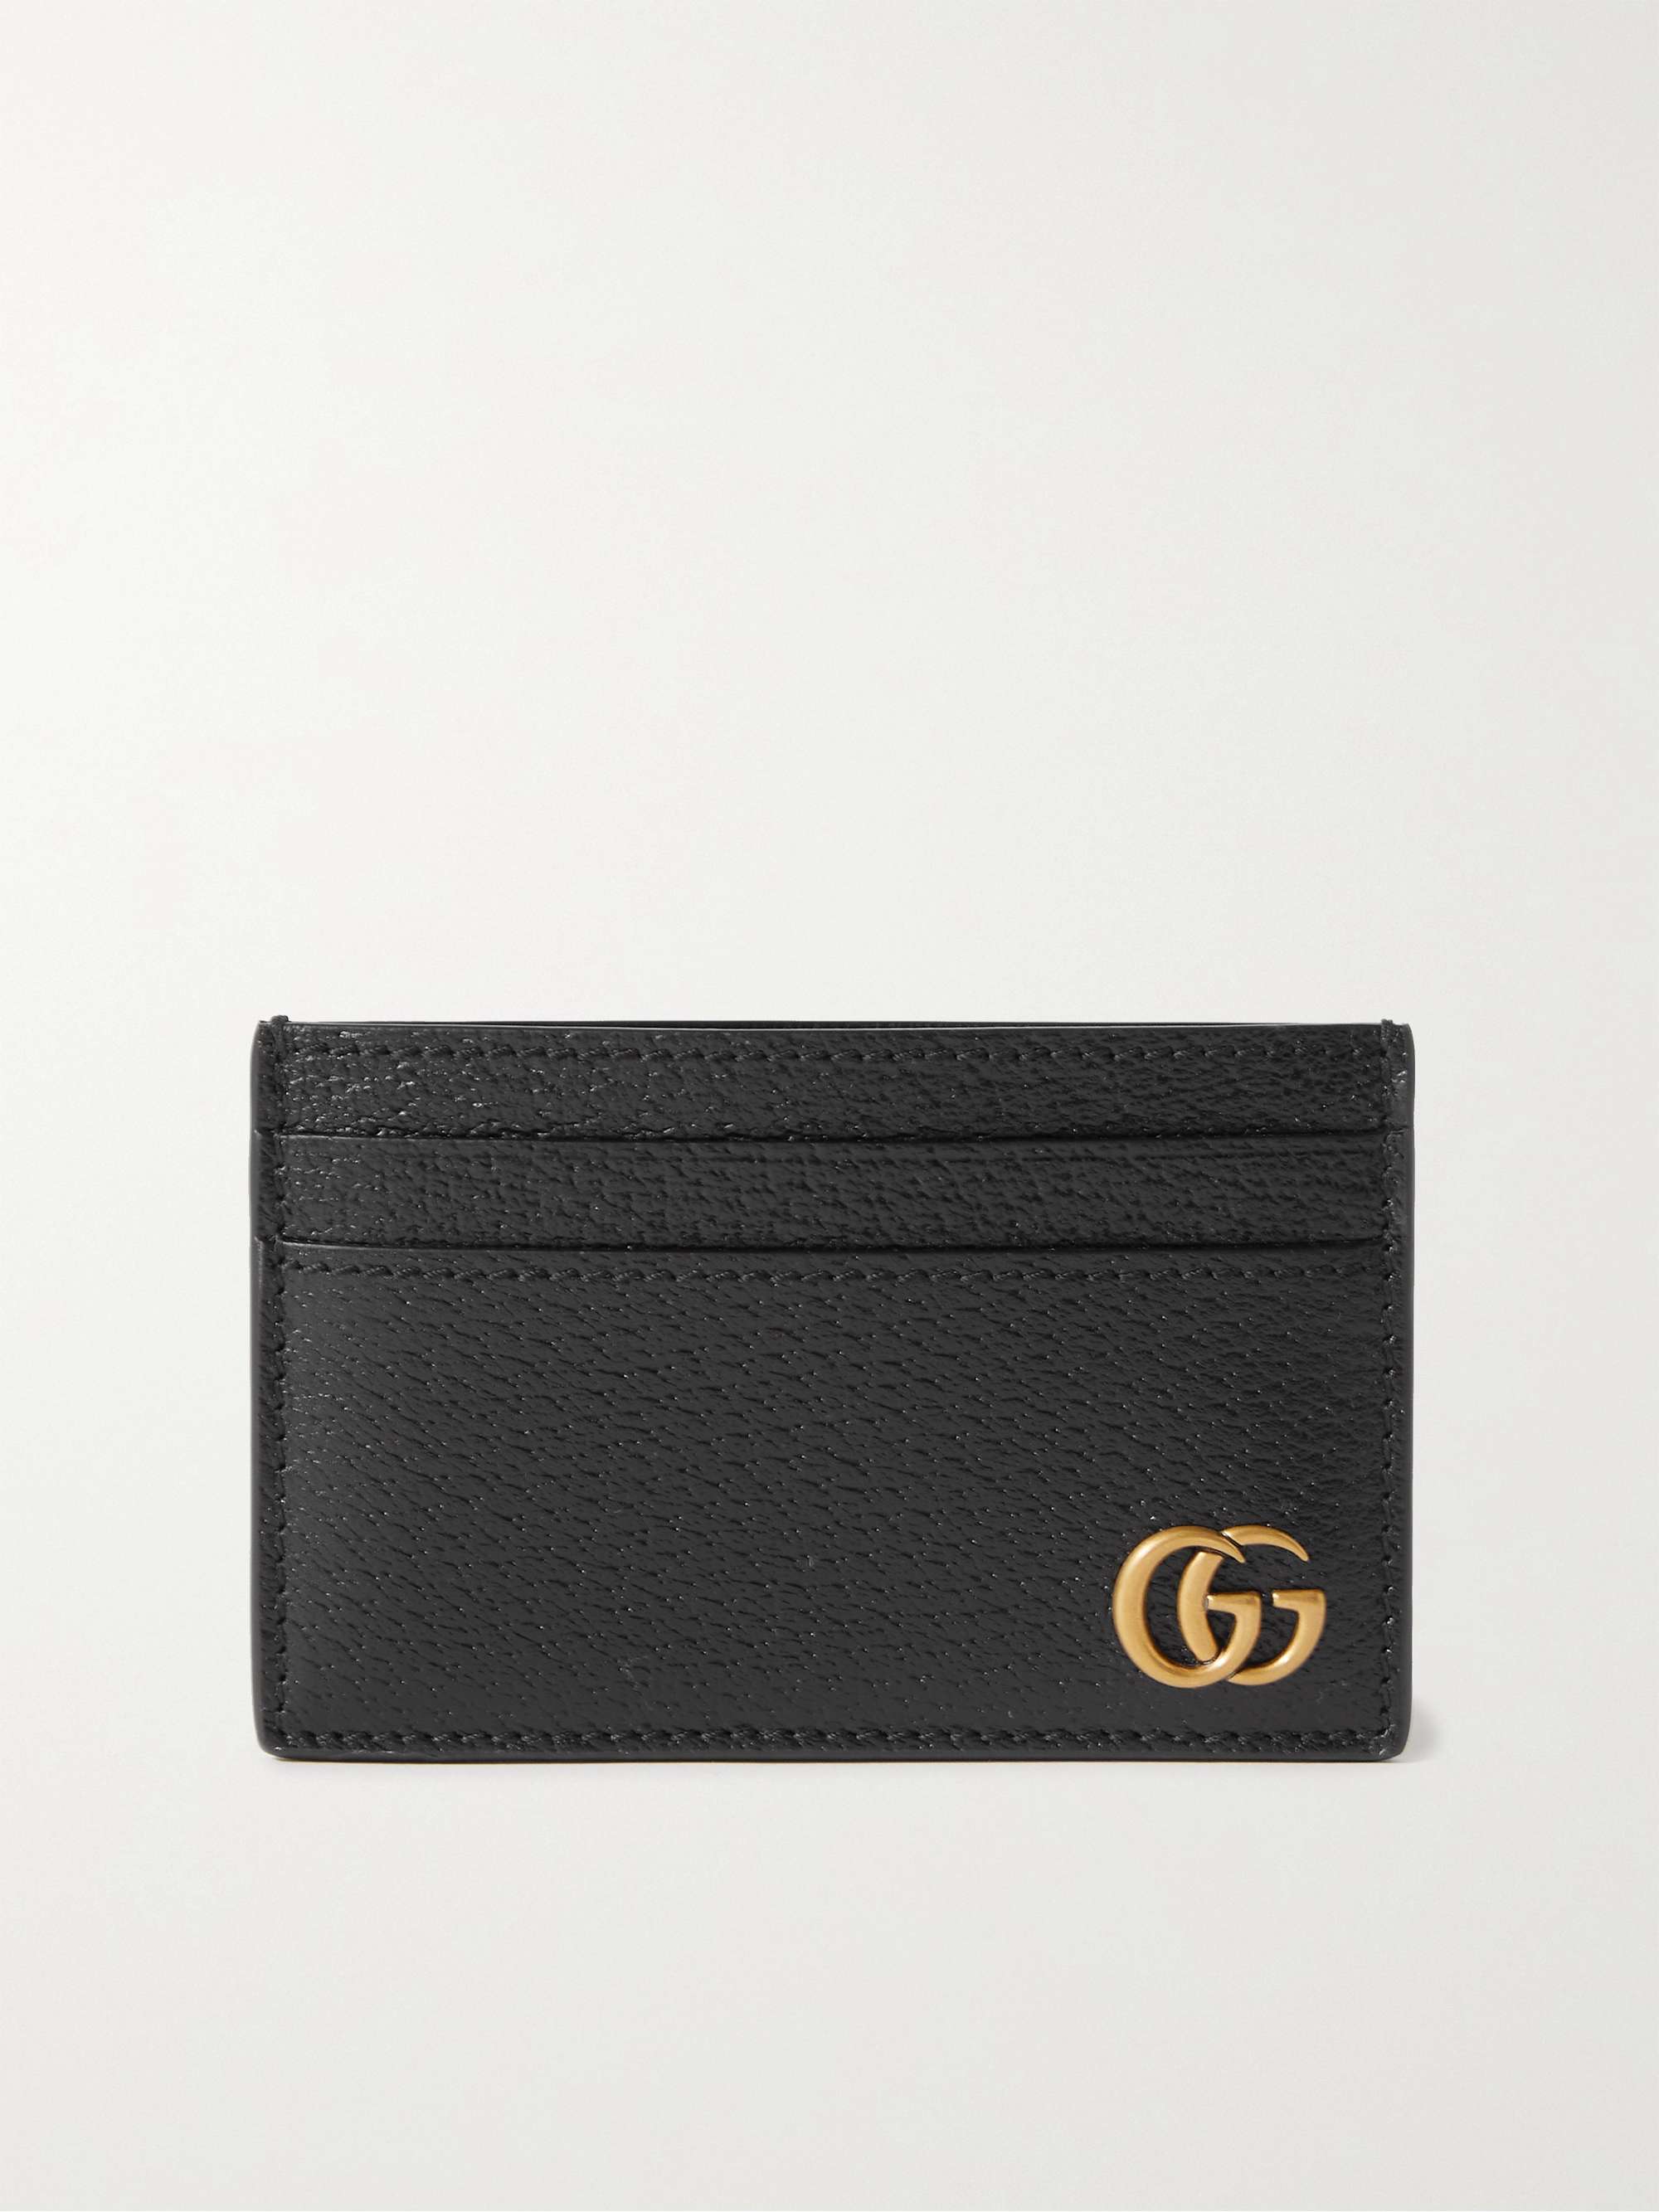 GUCCI GG Marmont Full-Grain Leather Cardholder for Men